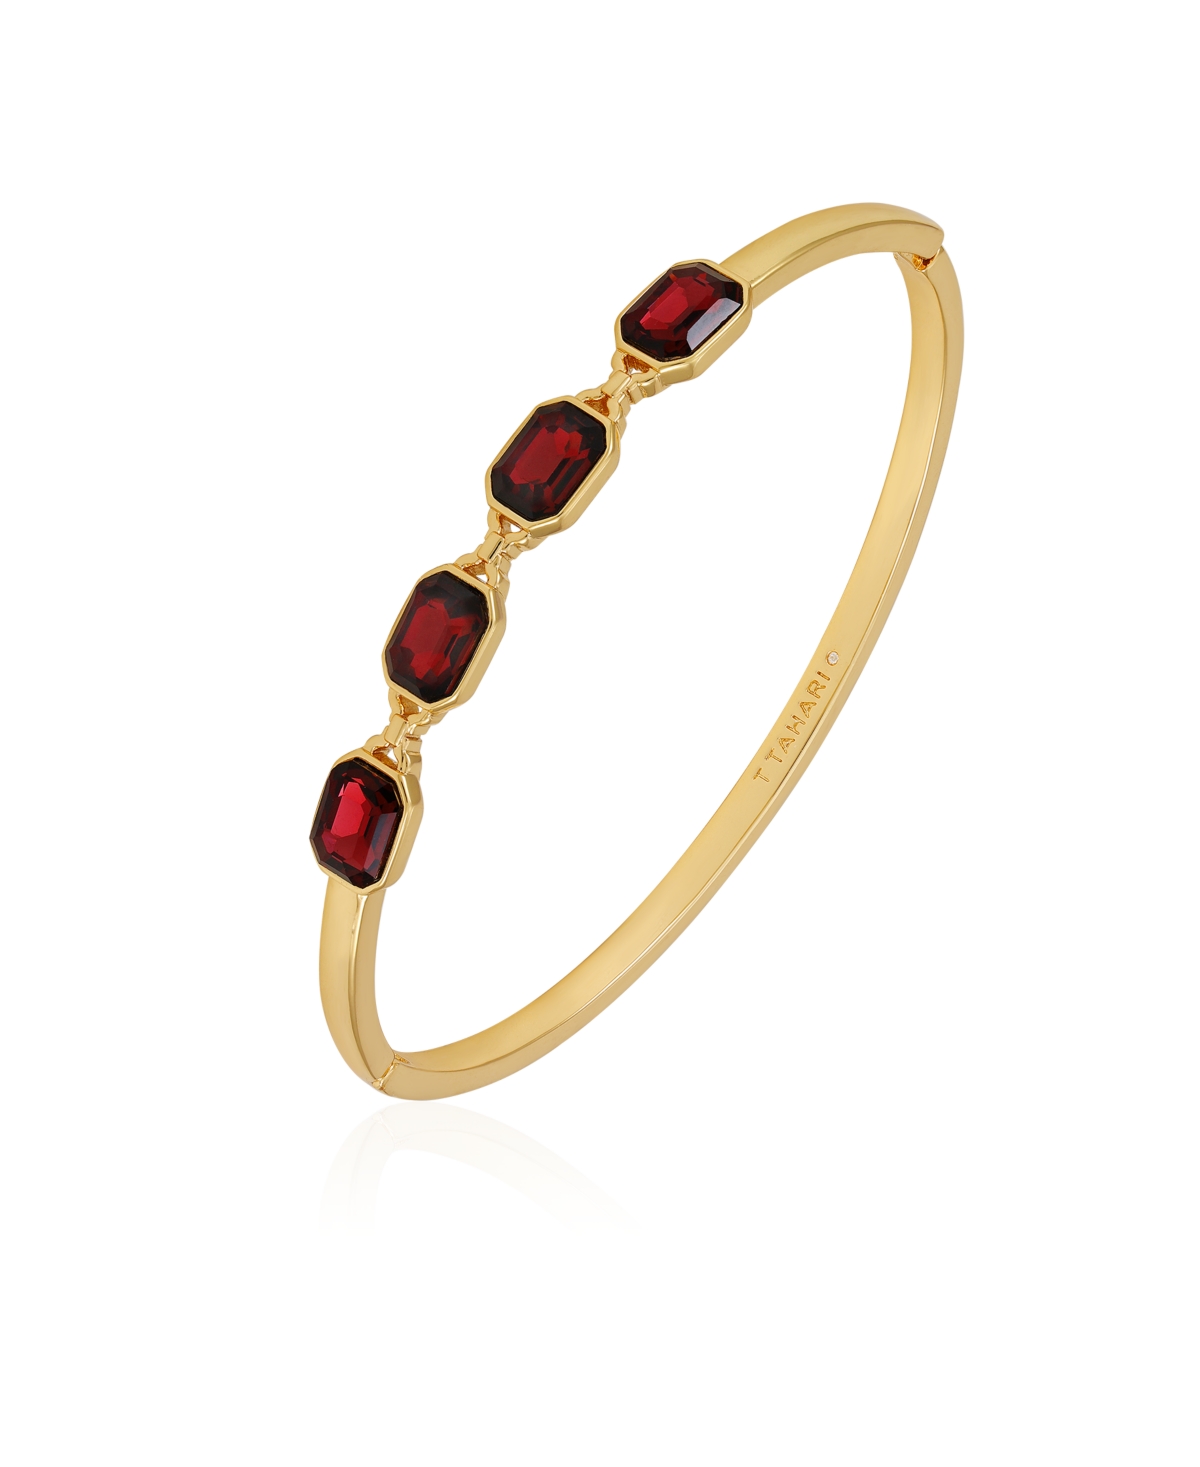 T Tahari Gold-tone And Dark Red Glass Stone Hinge Bangle Bracelet